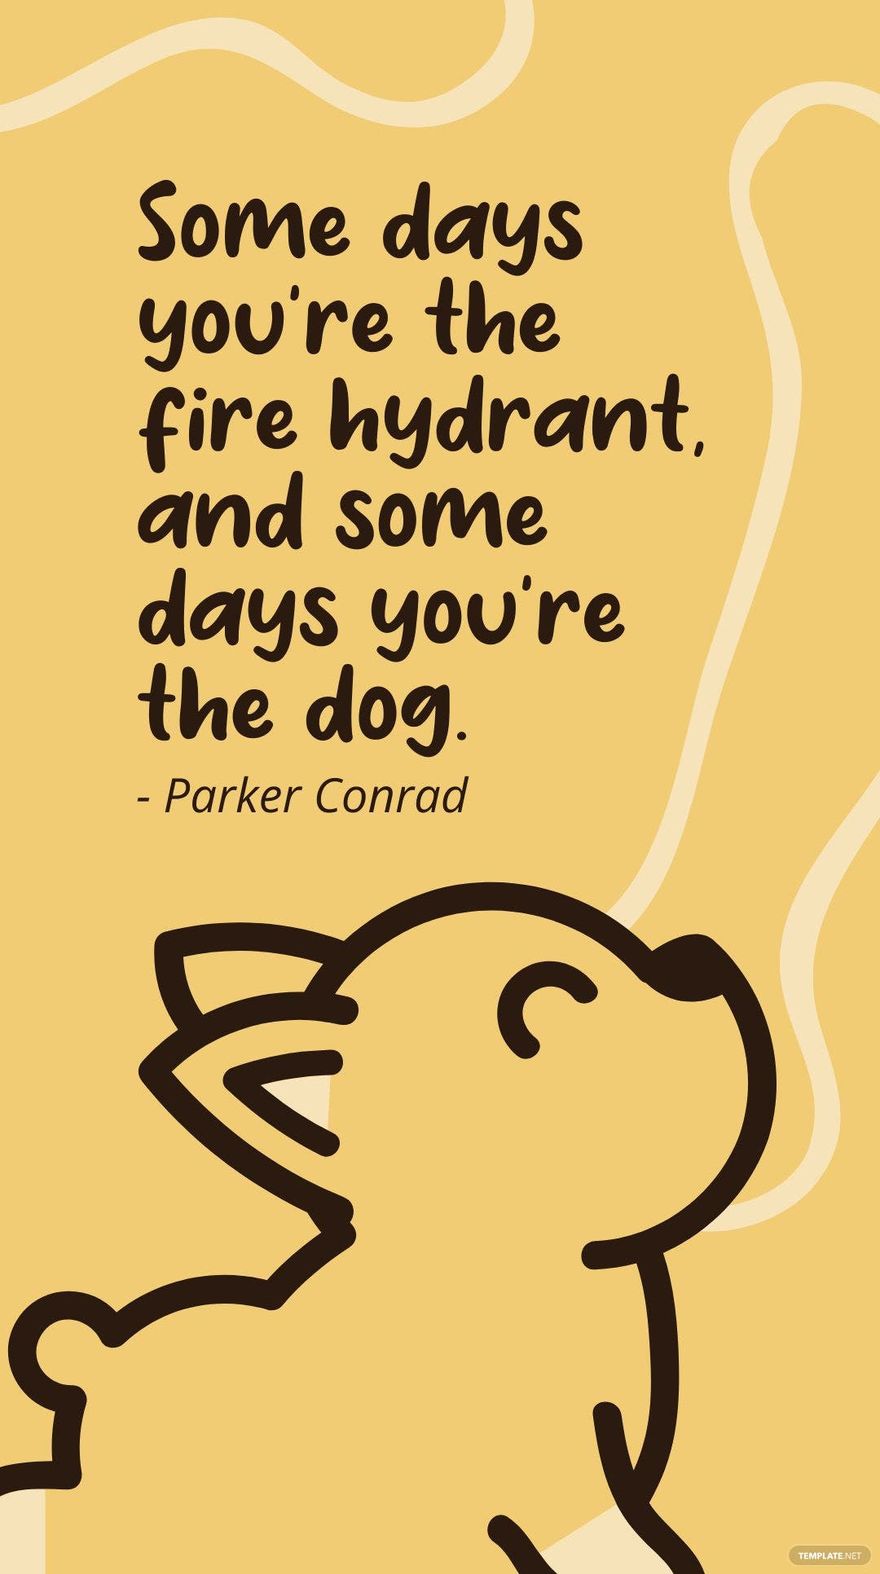 Parker Conrad - Some days you're the fire hydrant, and some days you're the dog.